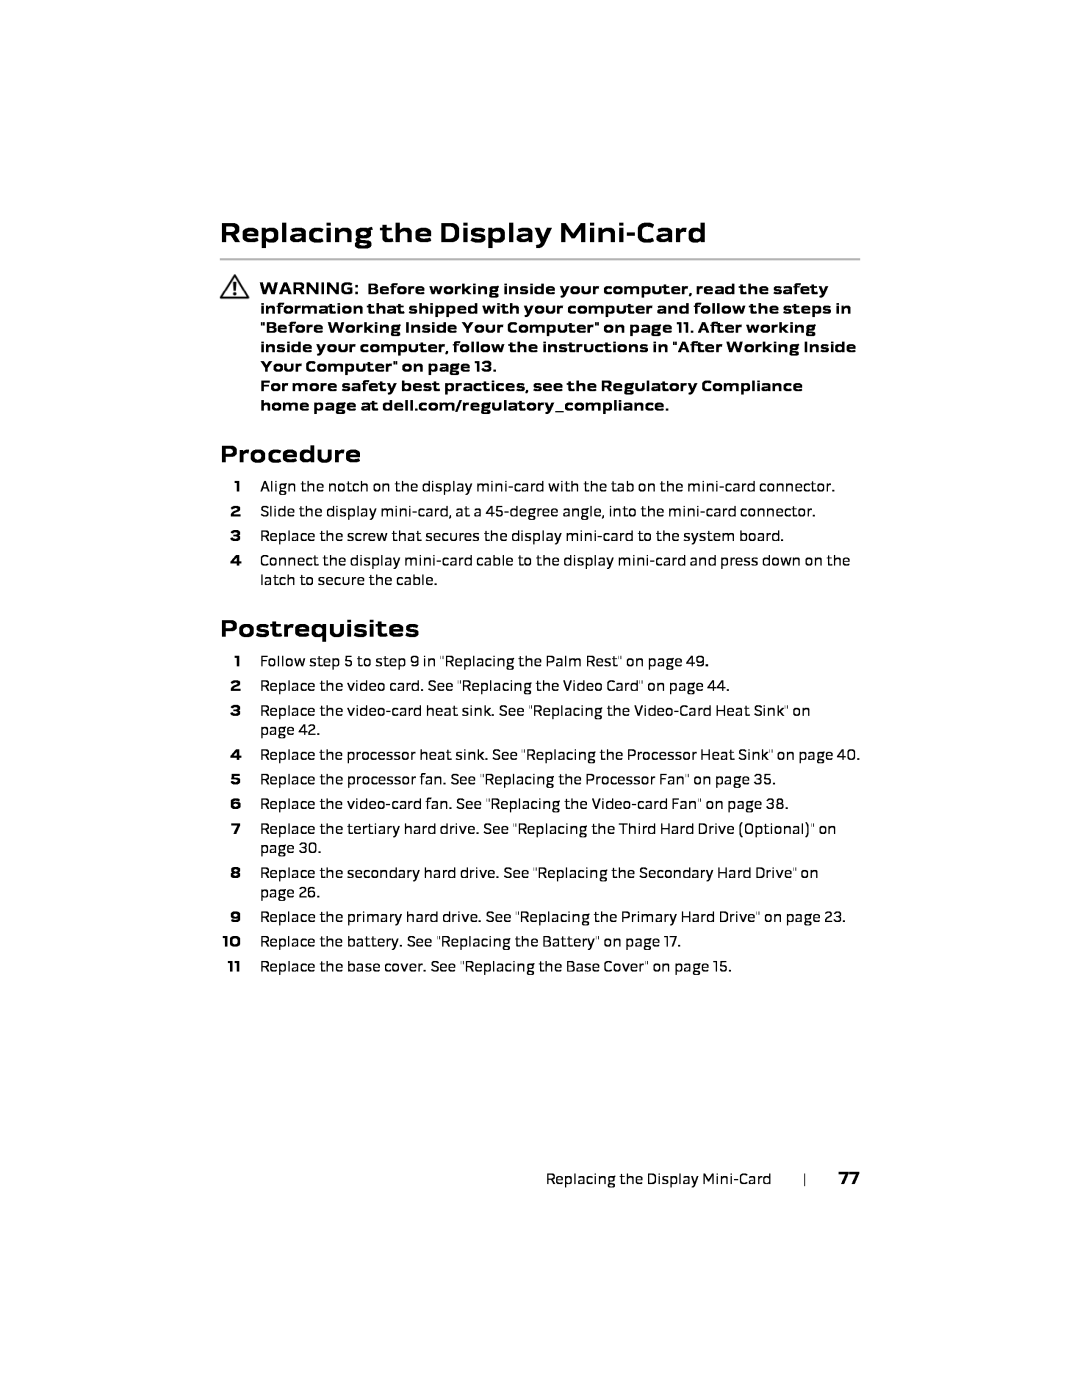 Alienware 17 R1, P18E owner manual Replacing the Display Mini-Card, Procedure, Postrequisites 